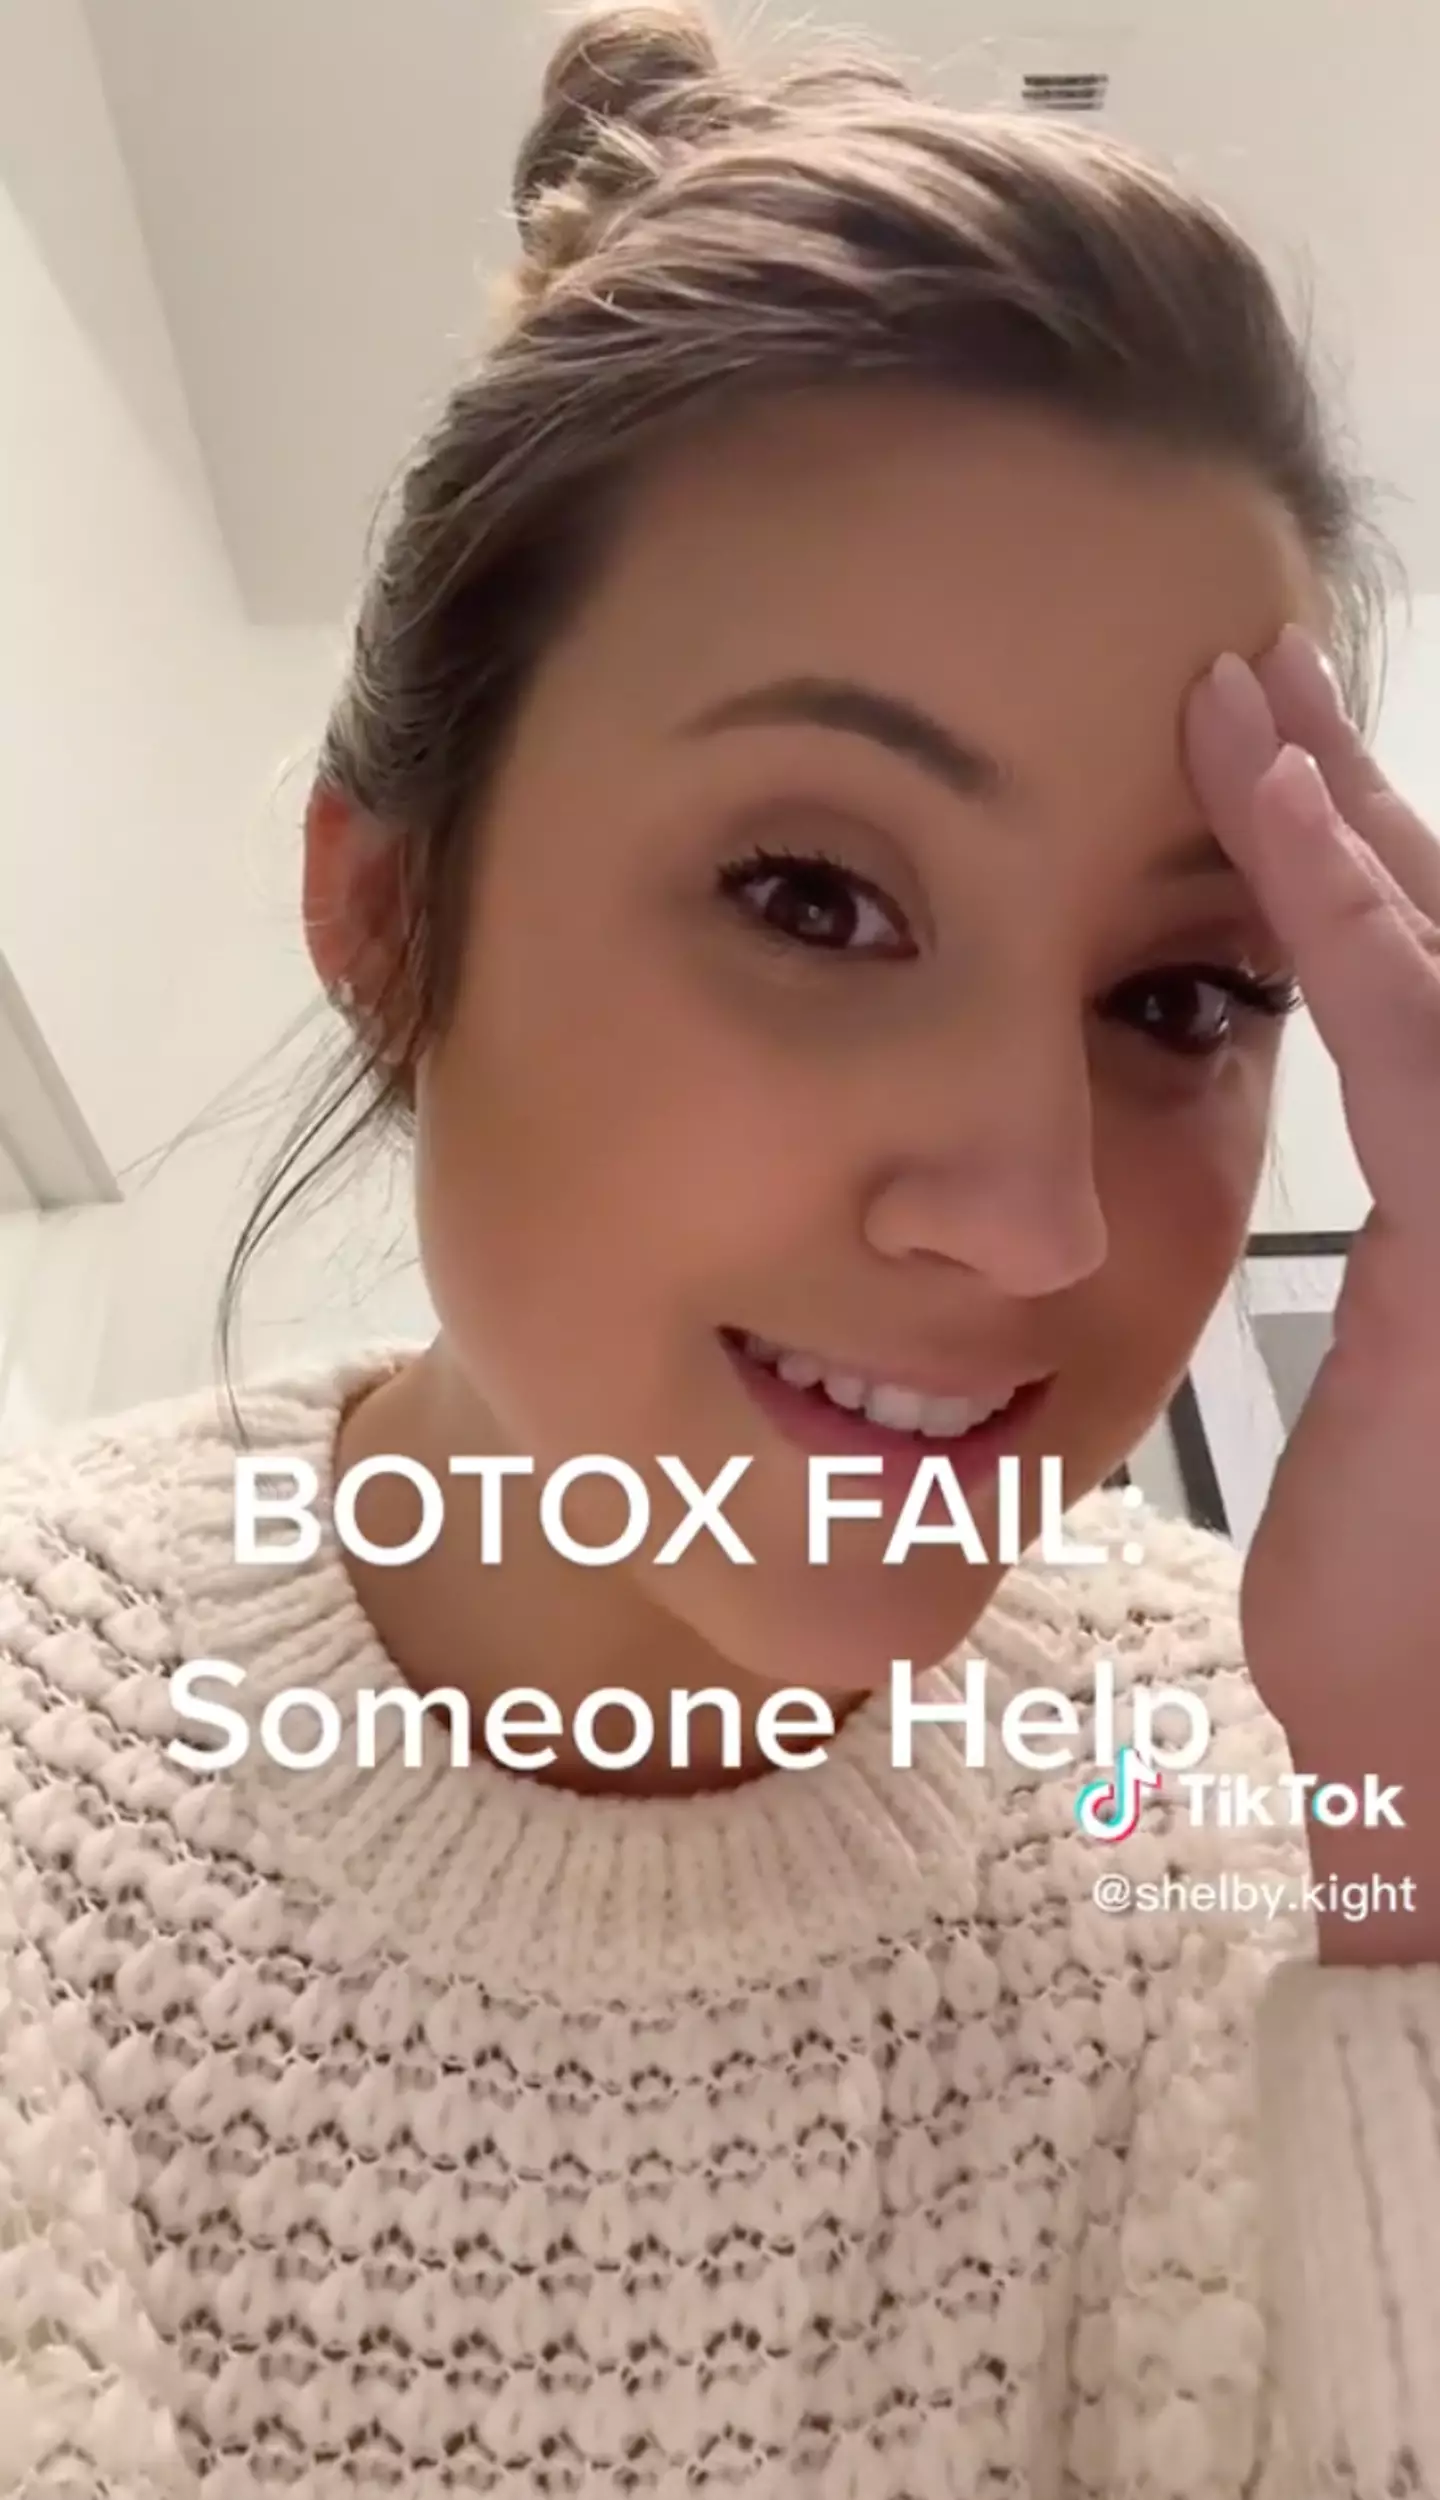 Hooks shared her 'Botox fail' on TikTok.